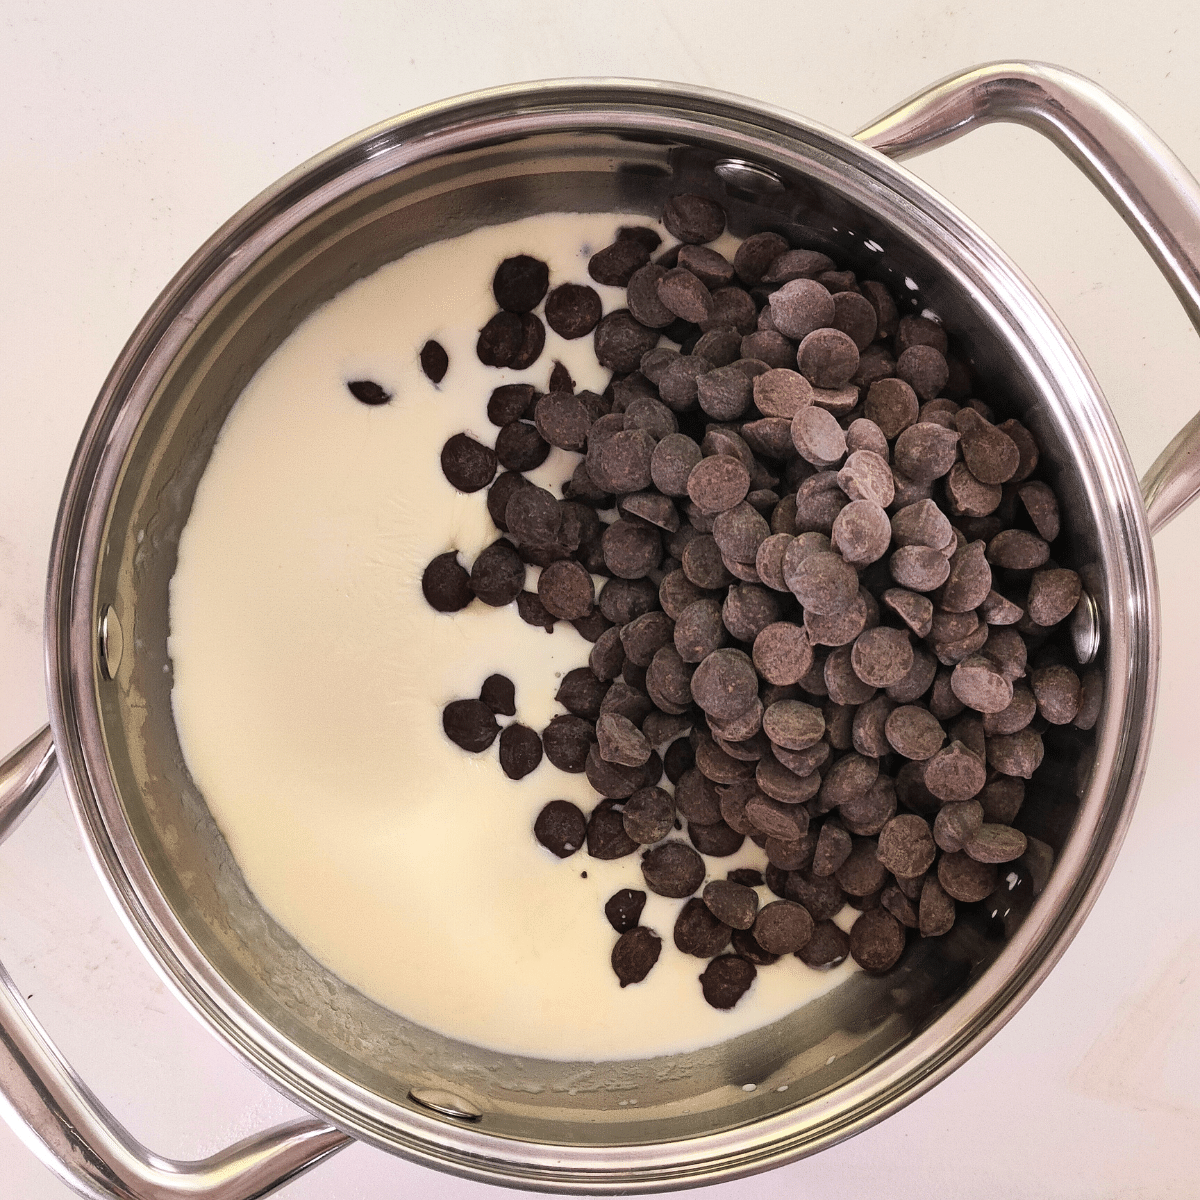 Chocolate in warm cream